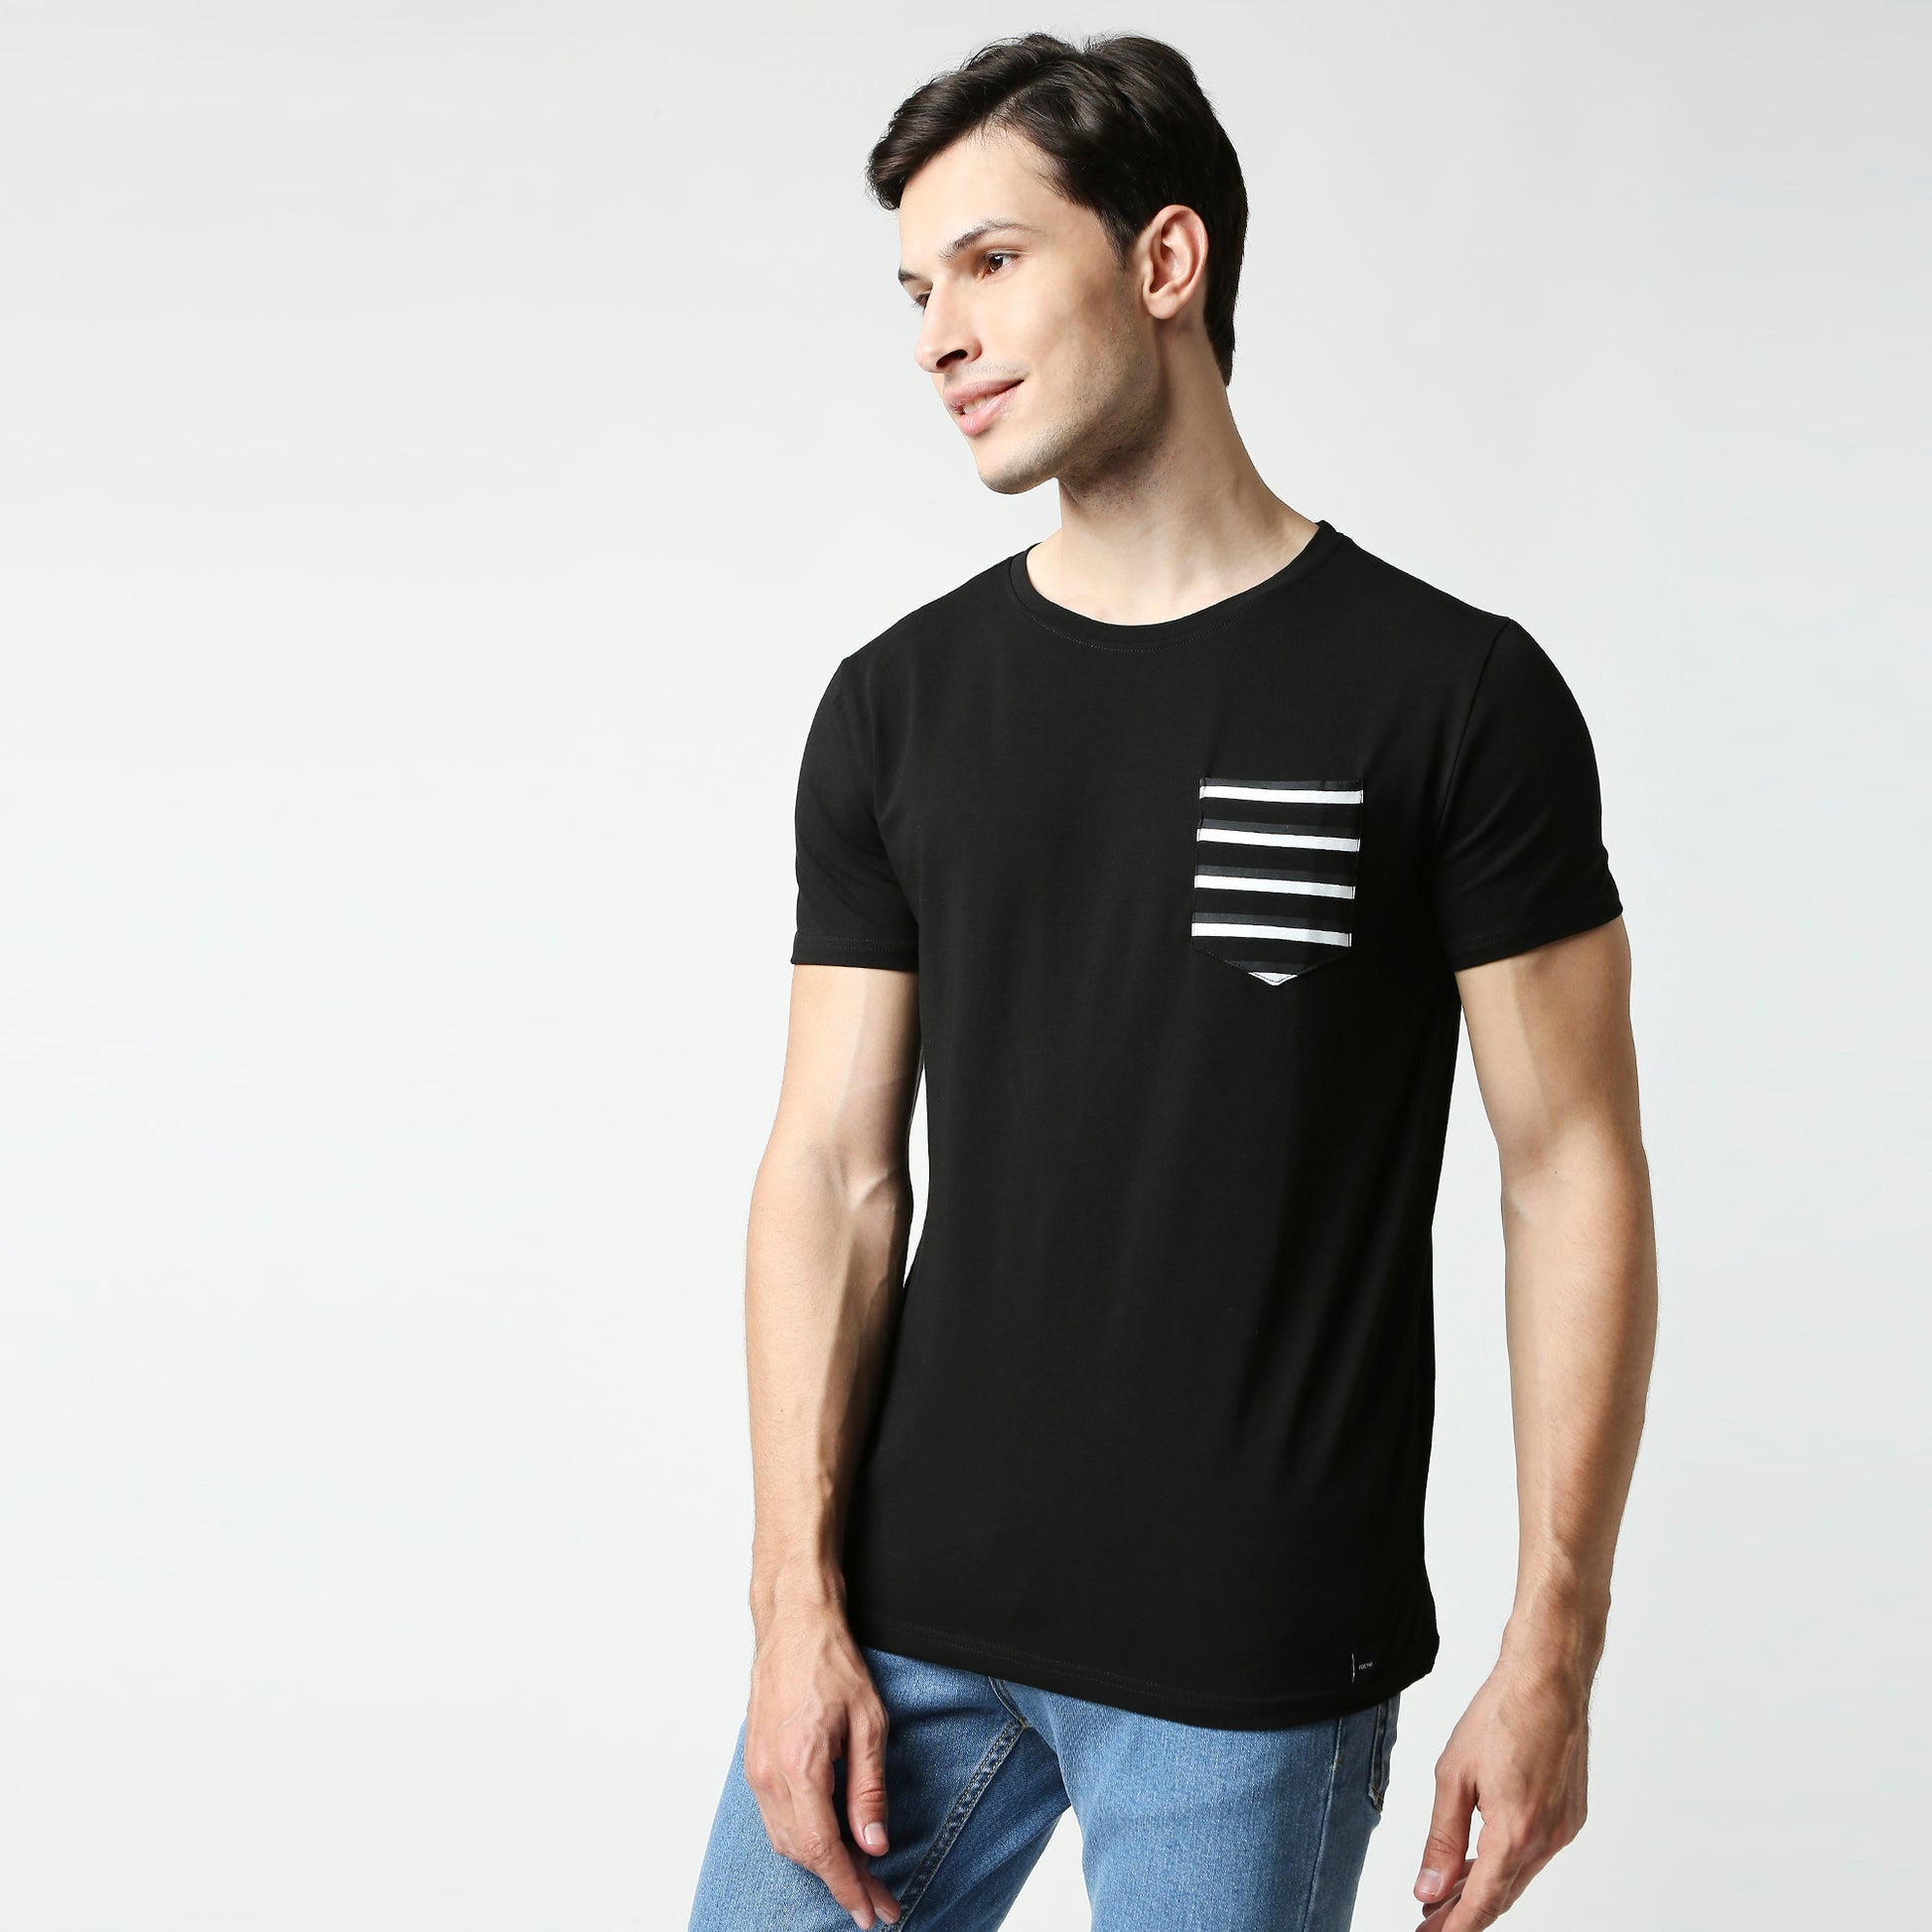 Fostino Zebra crew  neck t-shirt - Fostino - T-Shirts